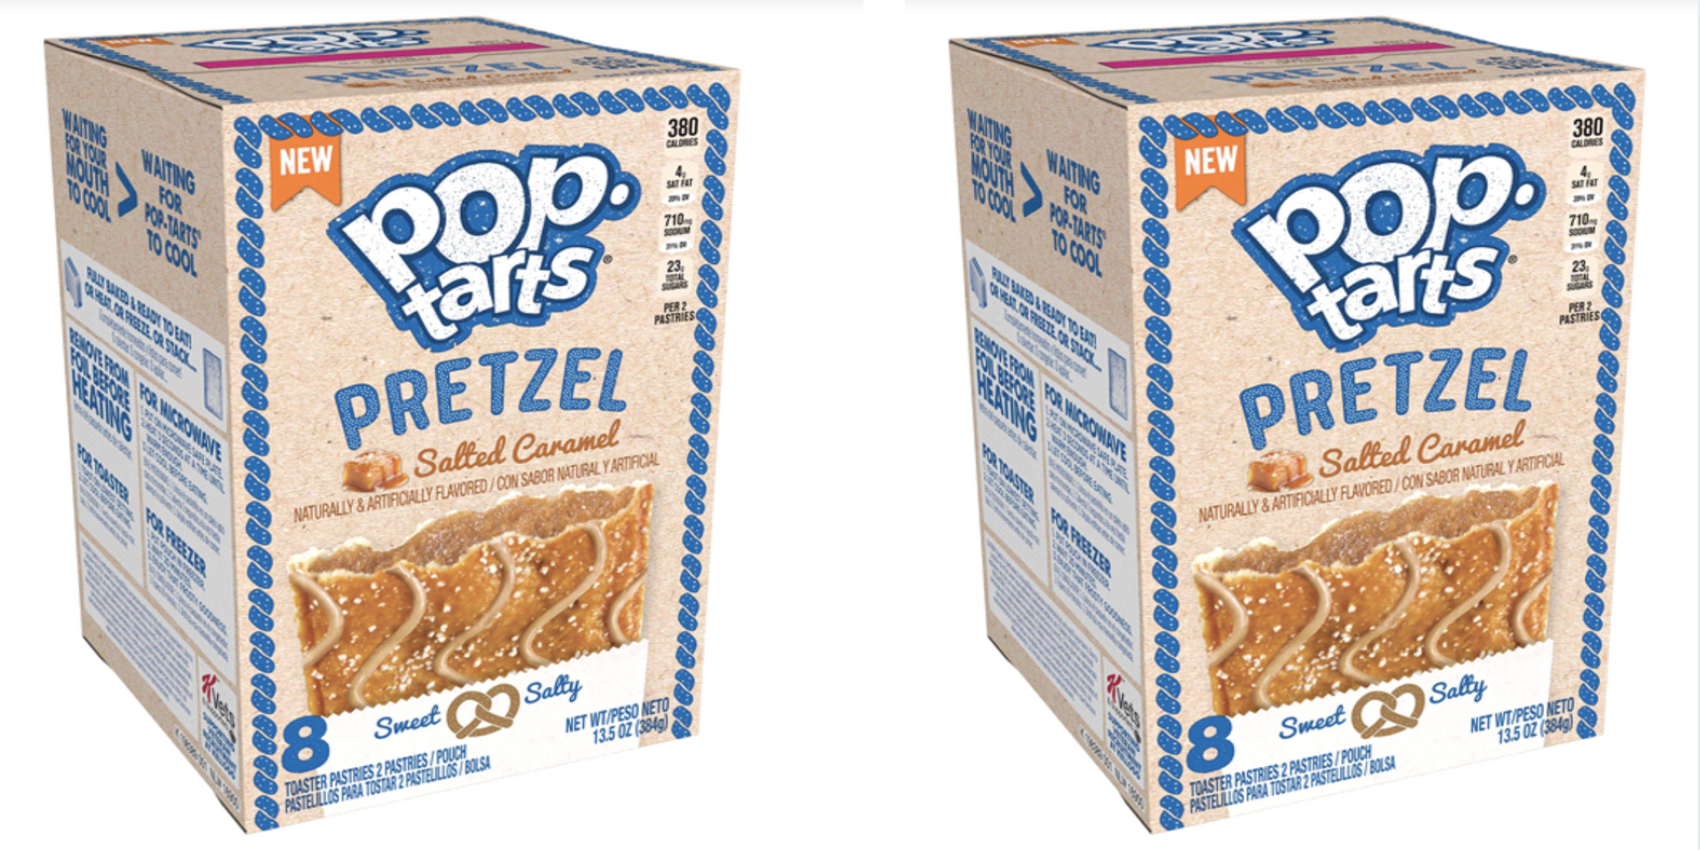 Kellogg's Is Launching New Pretzel-Flavored Pop-Tarts In January